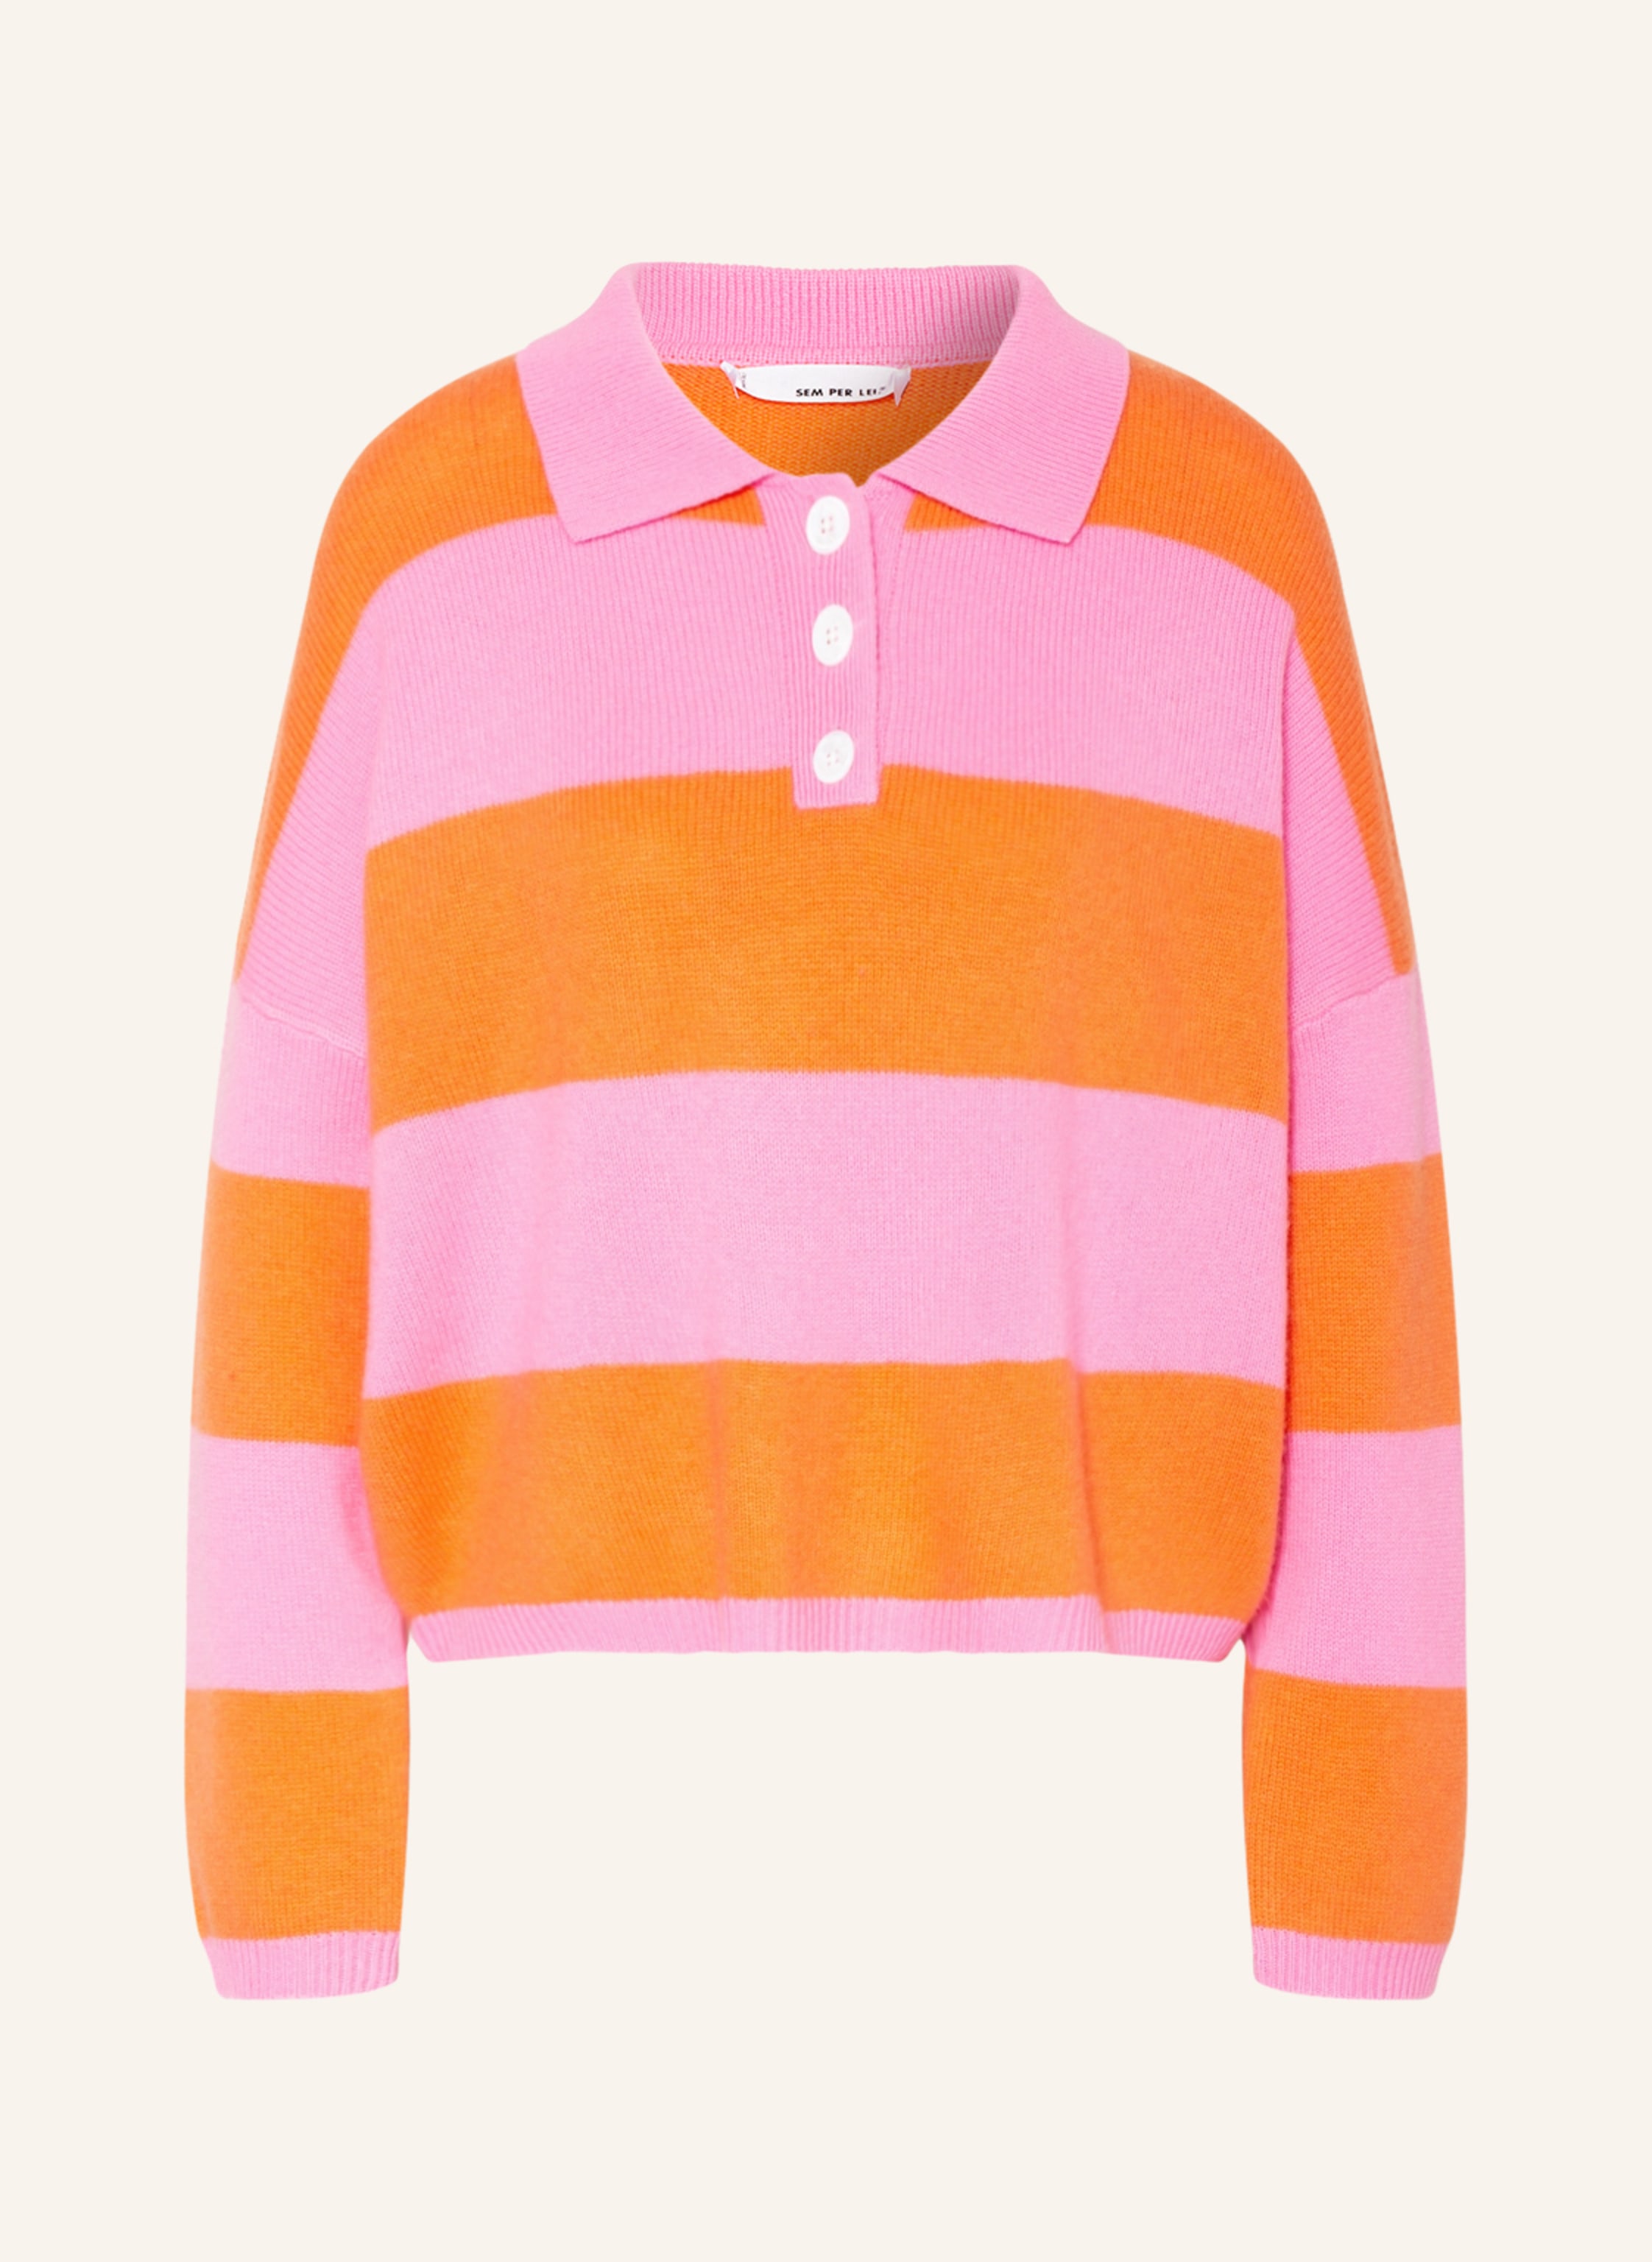 Cashmere in Strick-Poloshirt PER orange/ SEM LEI rosa mit